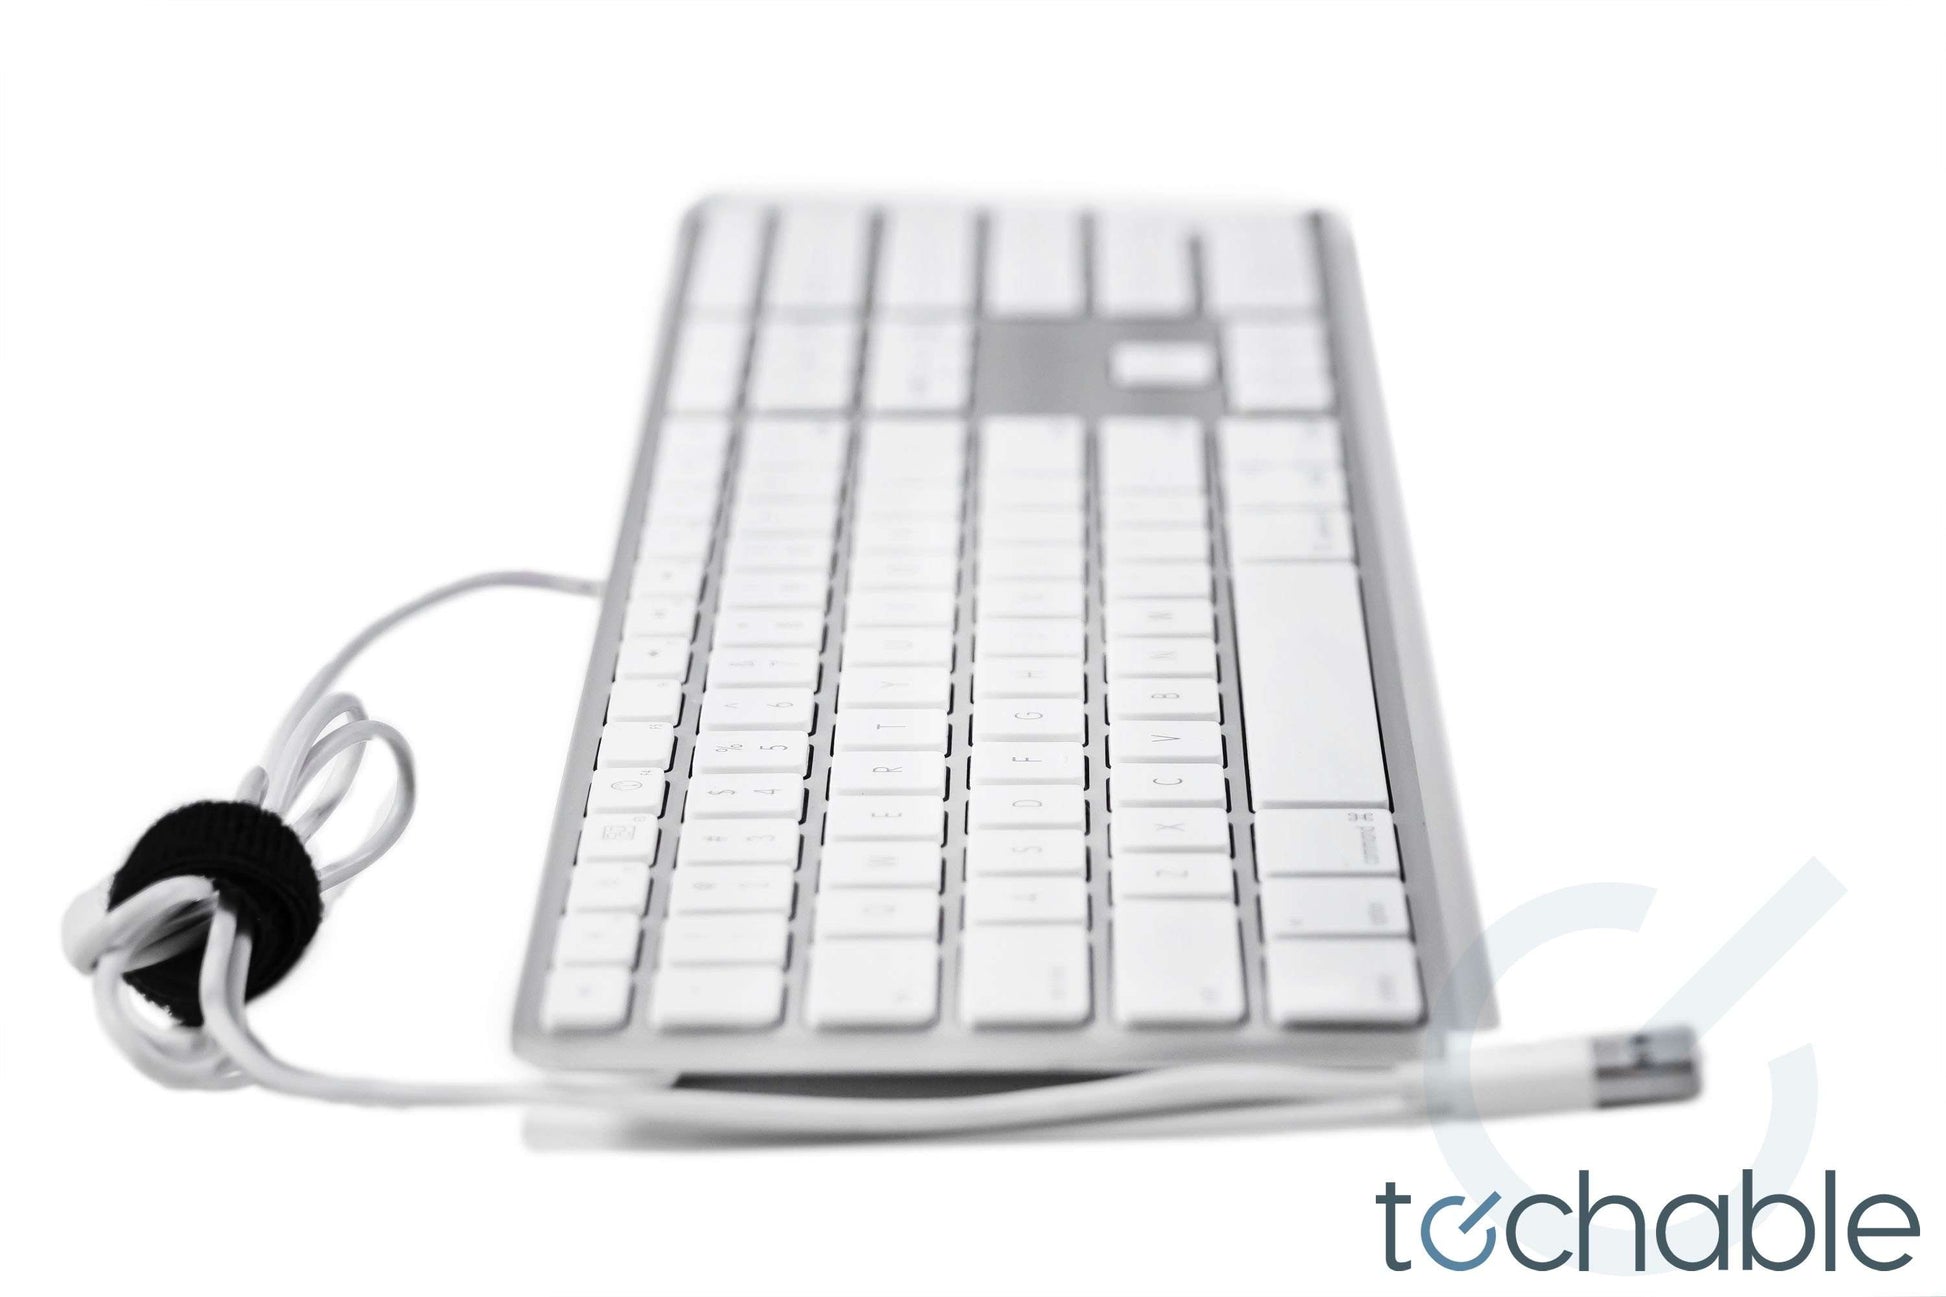 Apple Wired Keyboard with USB - A1243 -  MA110LL/A MB110LL/B